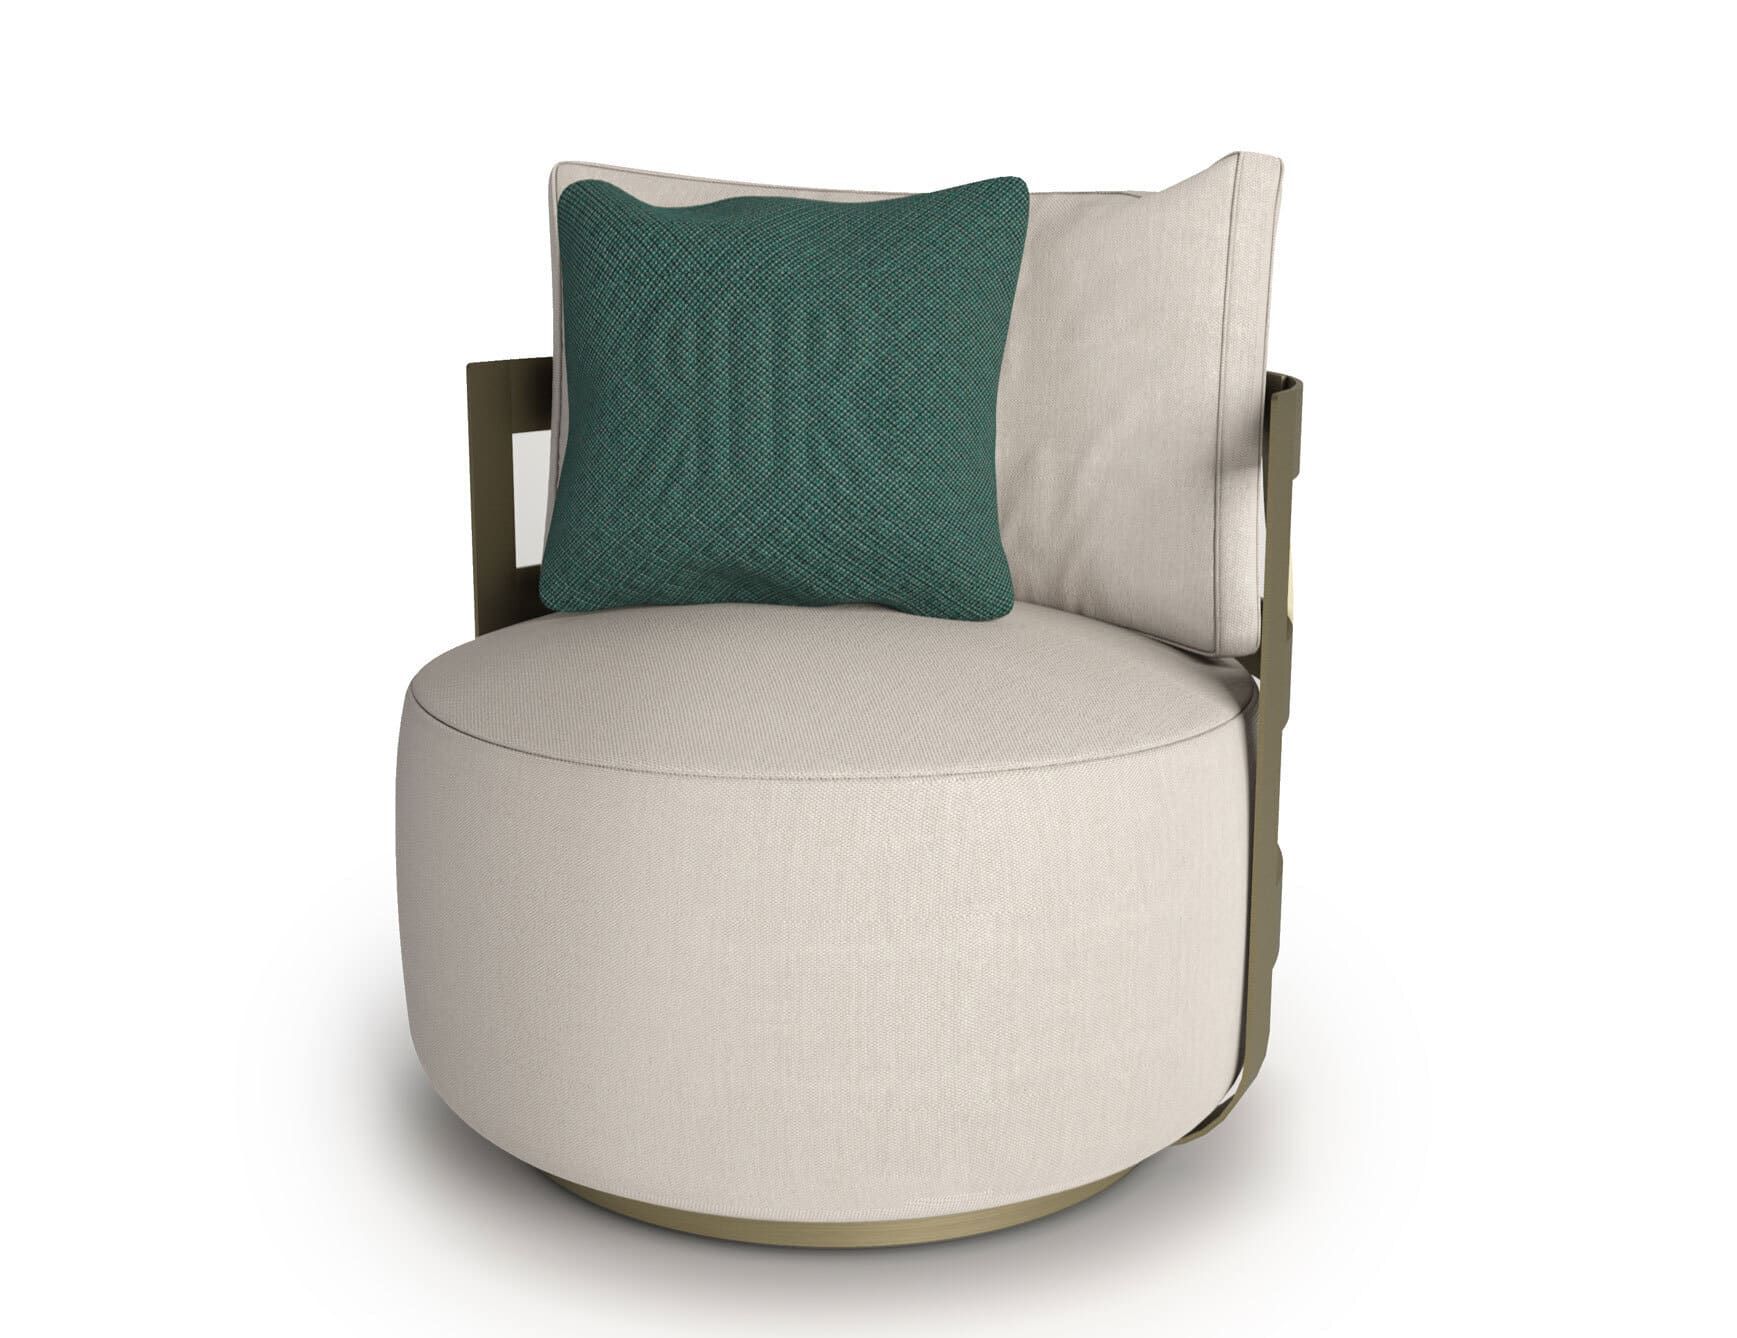 Luxury Italian Dafne Poltrona Girevole Outdoor Sofa Chair in Beige ...